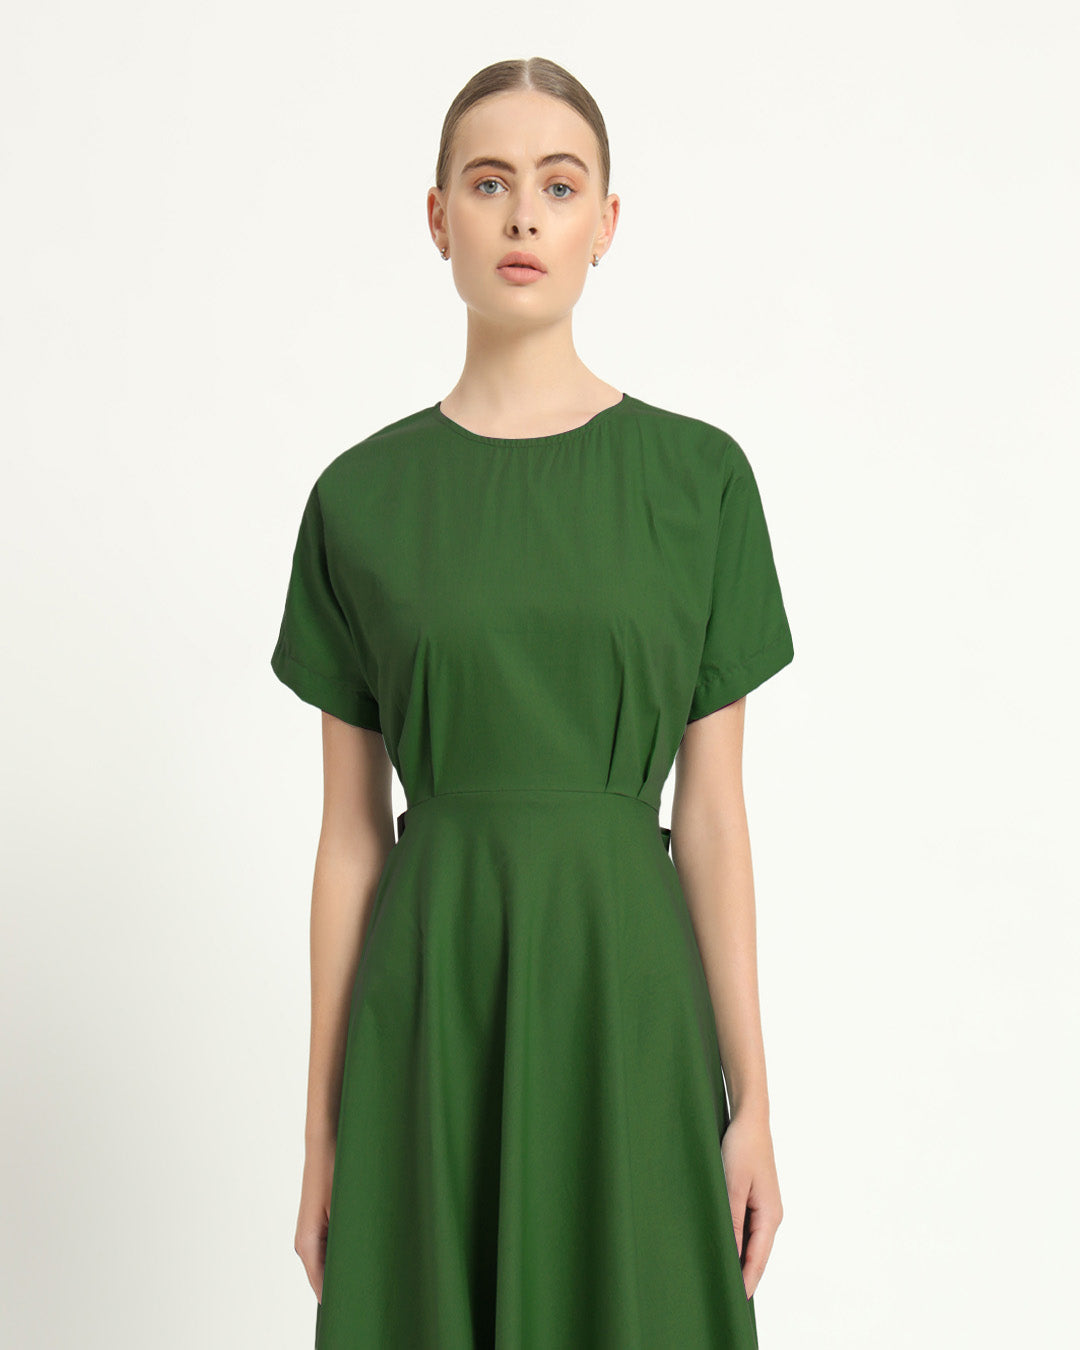 The Griffen Emerald Cotton Dress